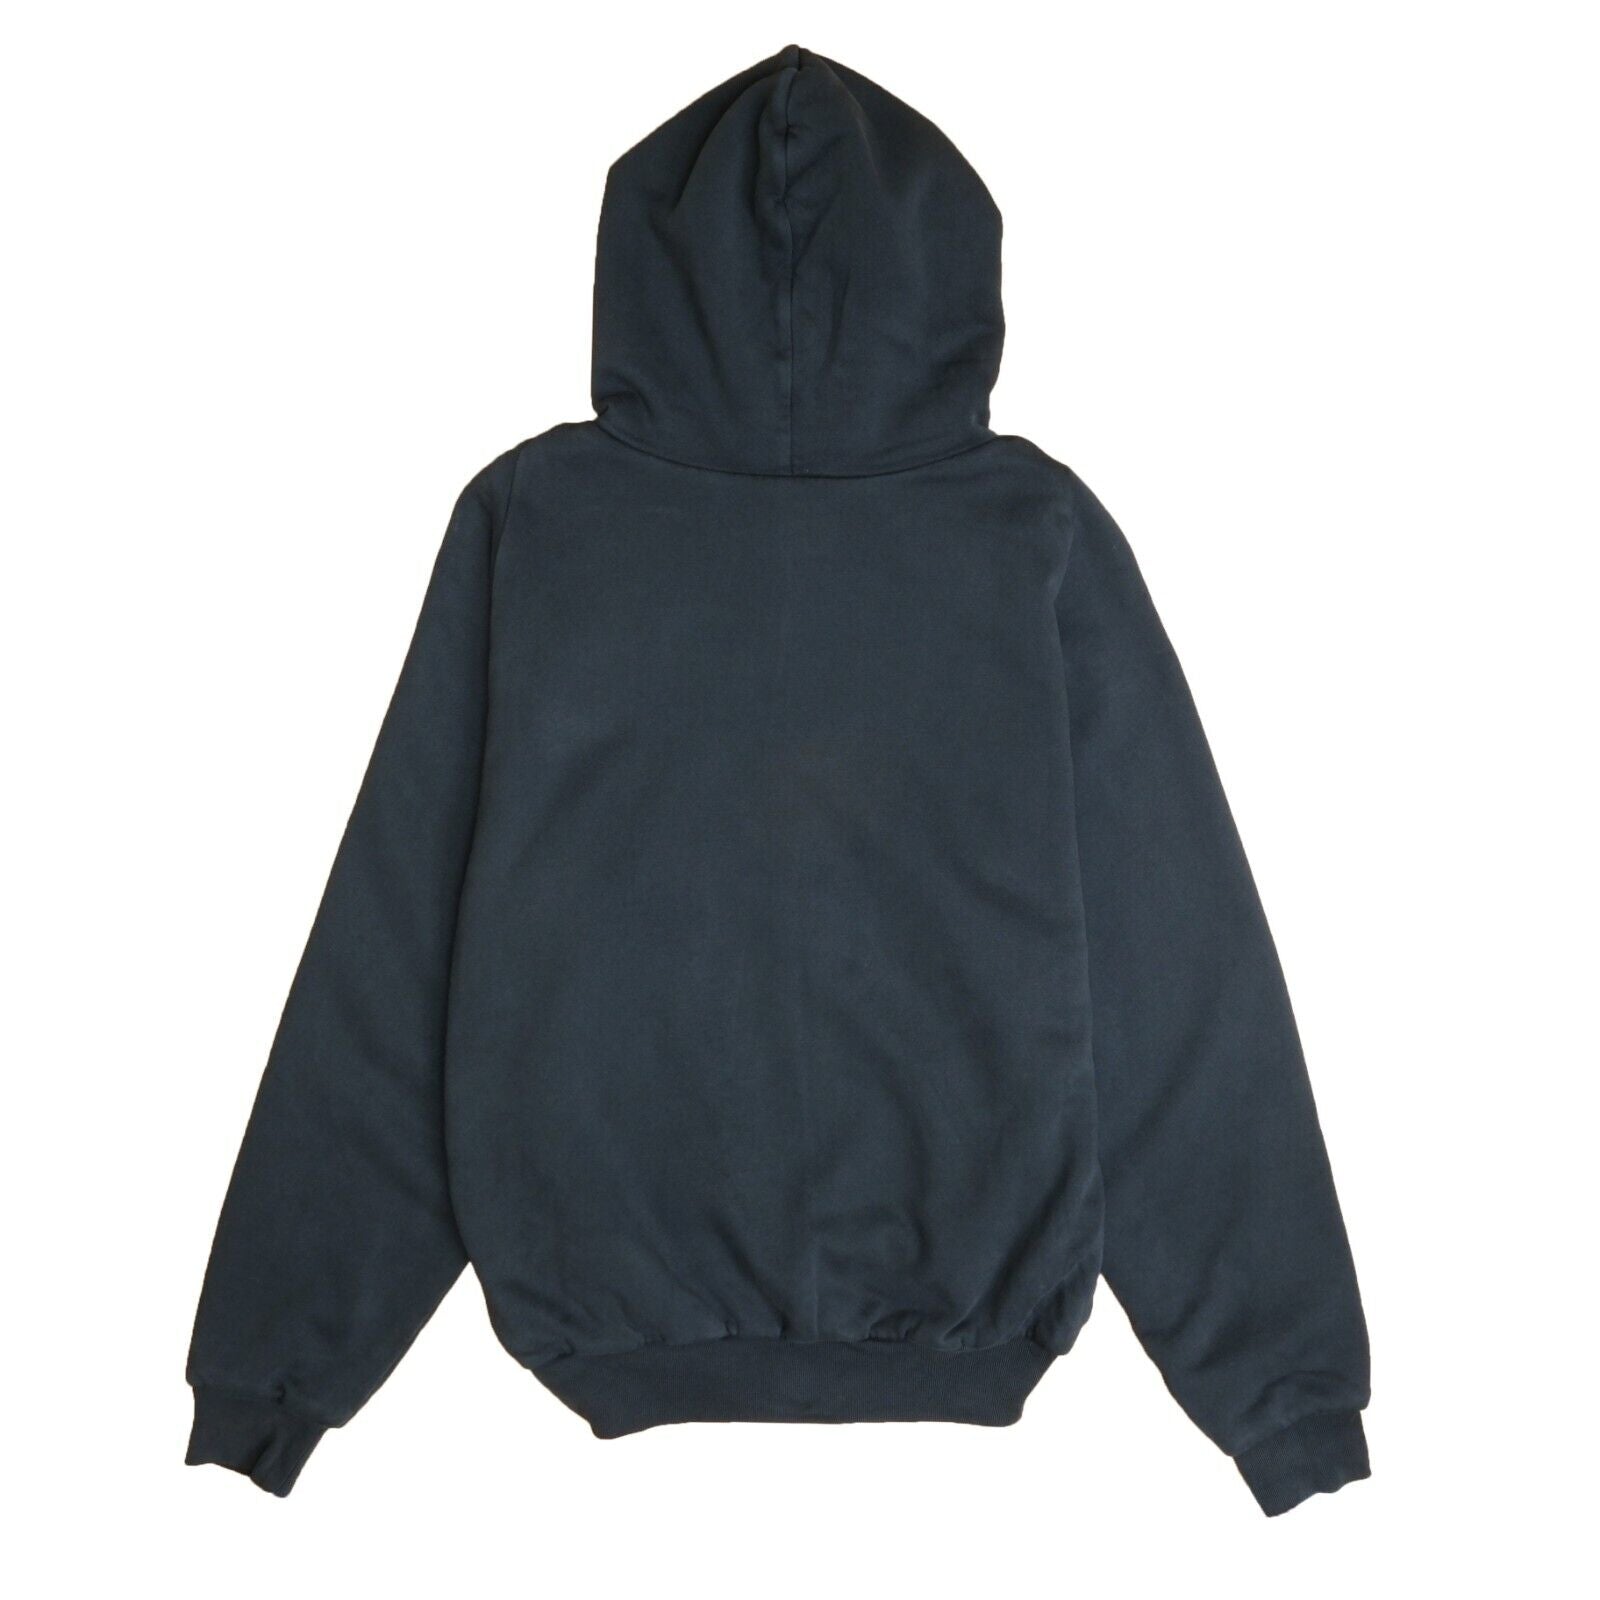 Yeezy Gap Unreleased Zip Sweatshirt Hoodie Size Small Black